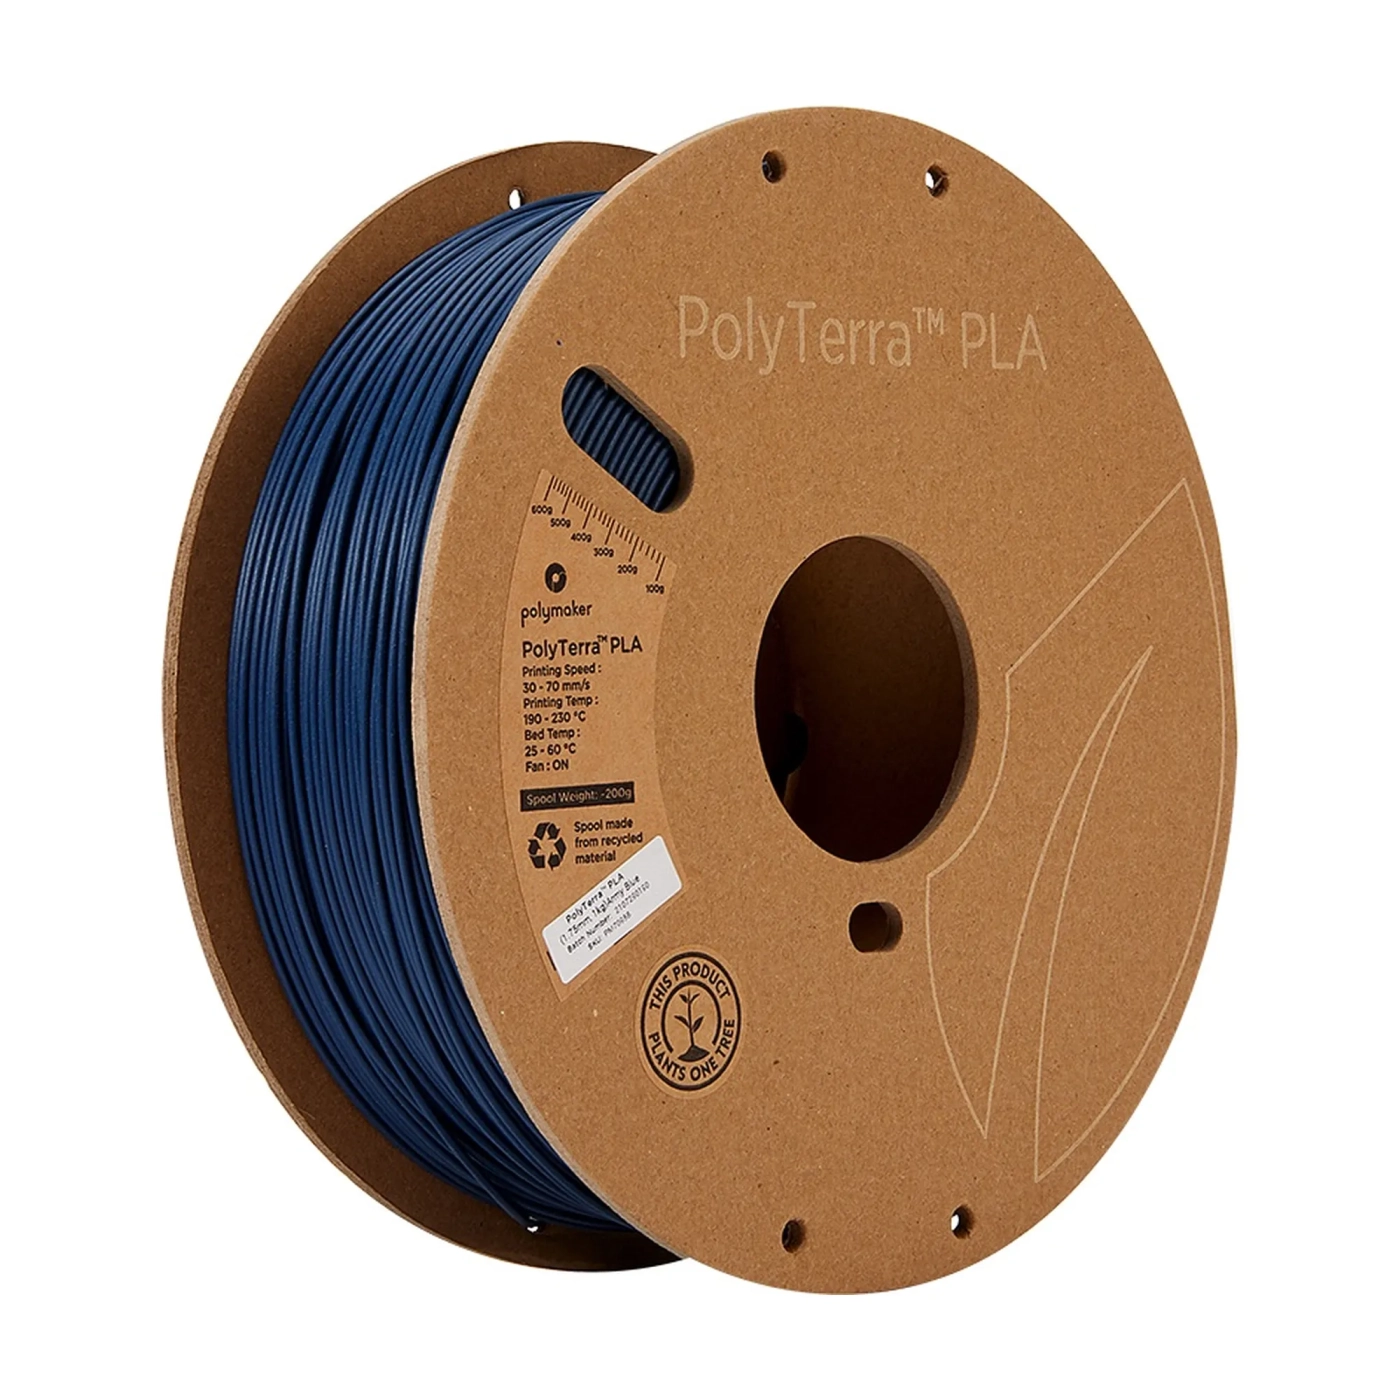 Купить PolyTerra PLA Filament (пластик) для 3D принтера Polymaker 1кг, 1.75мм, армейский синий - фото 1